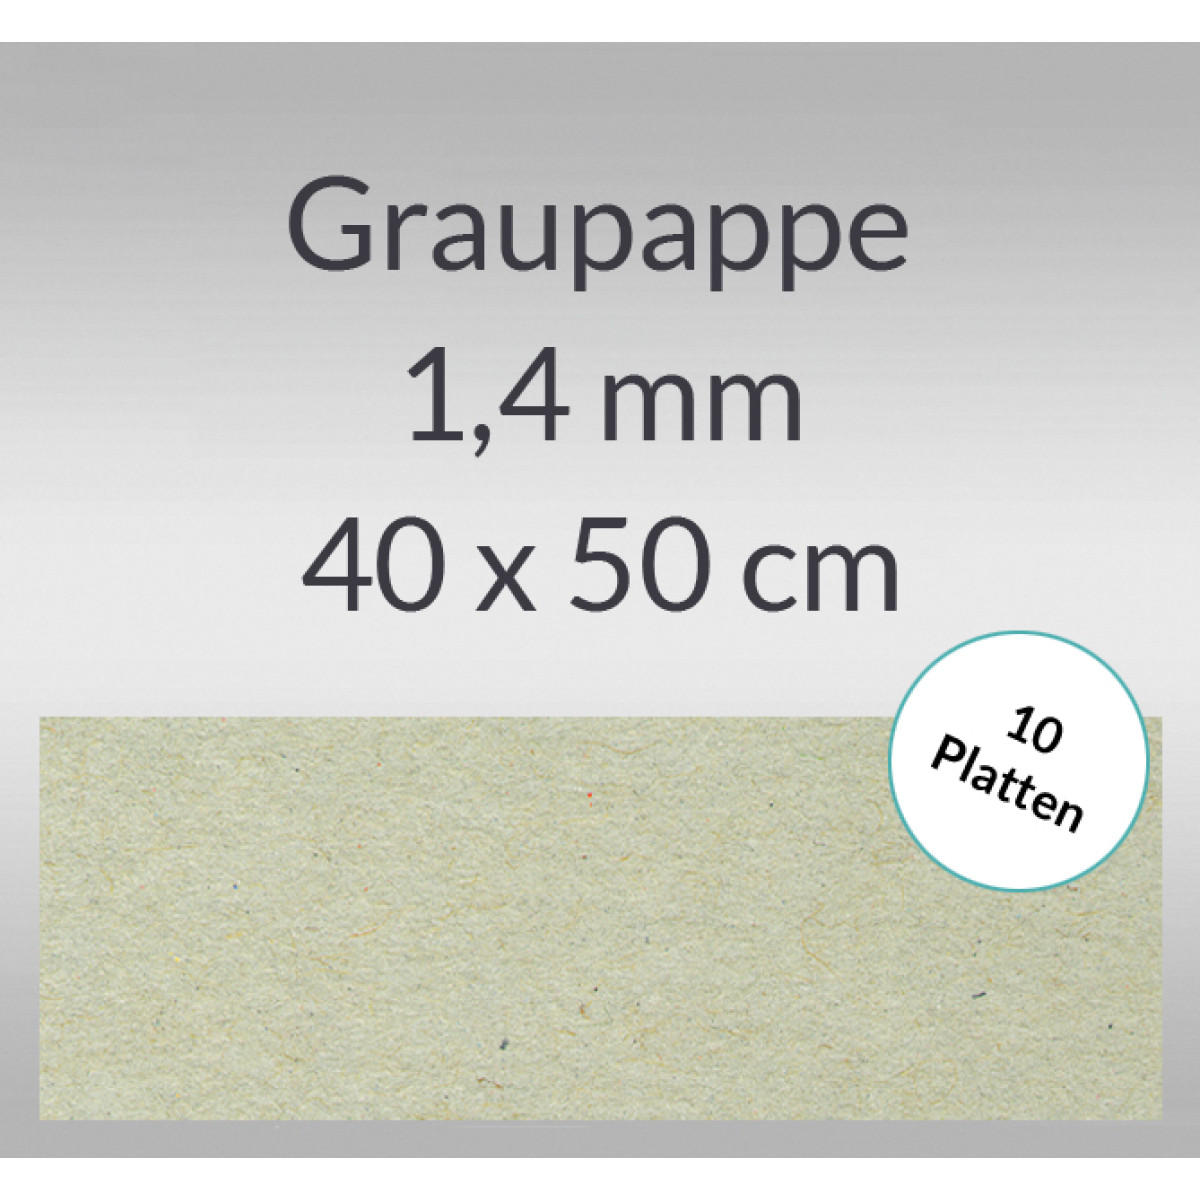 Graupappe 40 x 50 cm - 1,4 mm